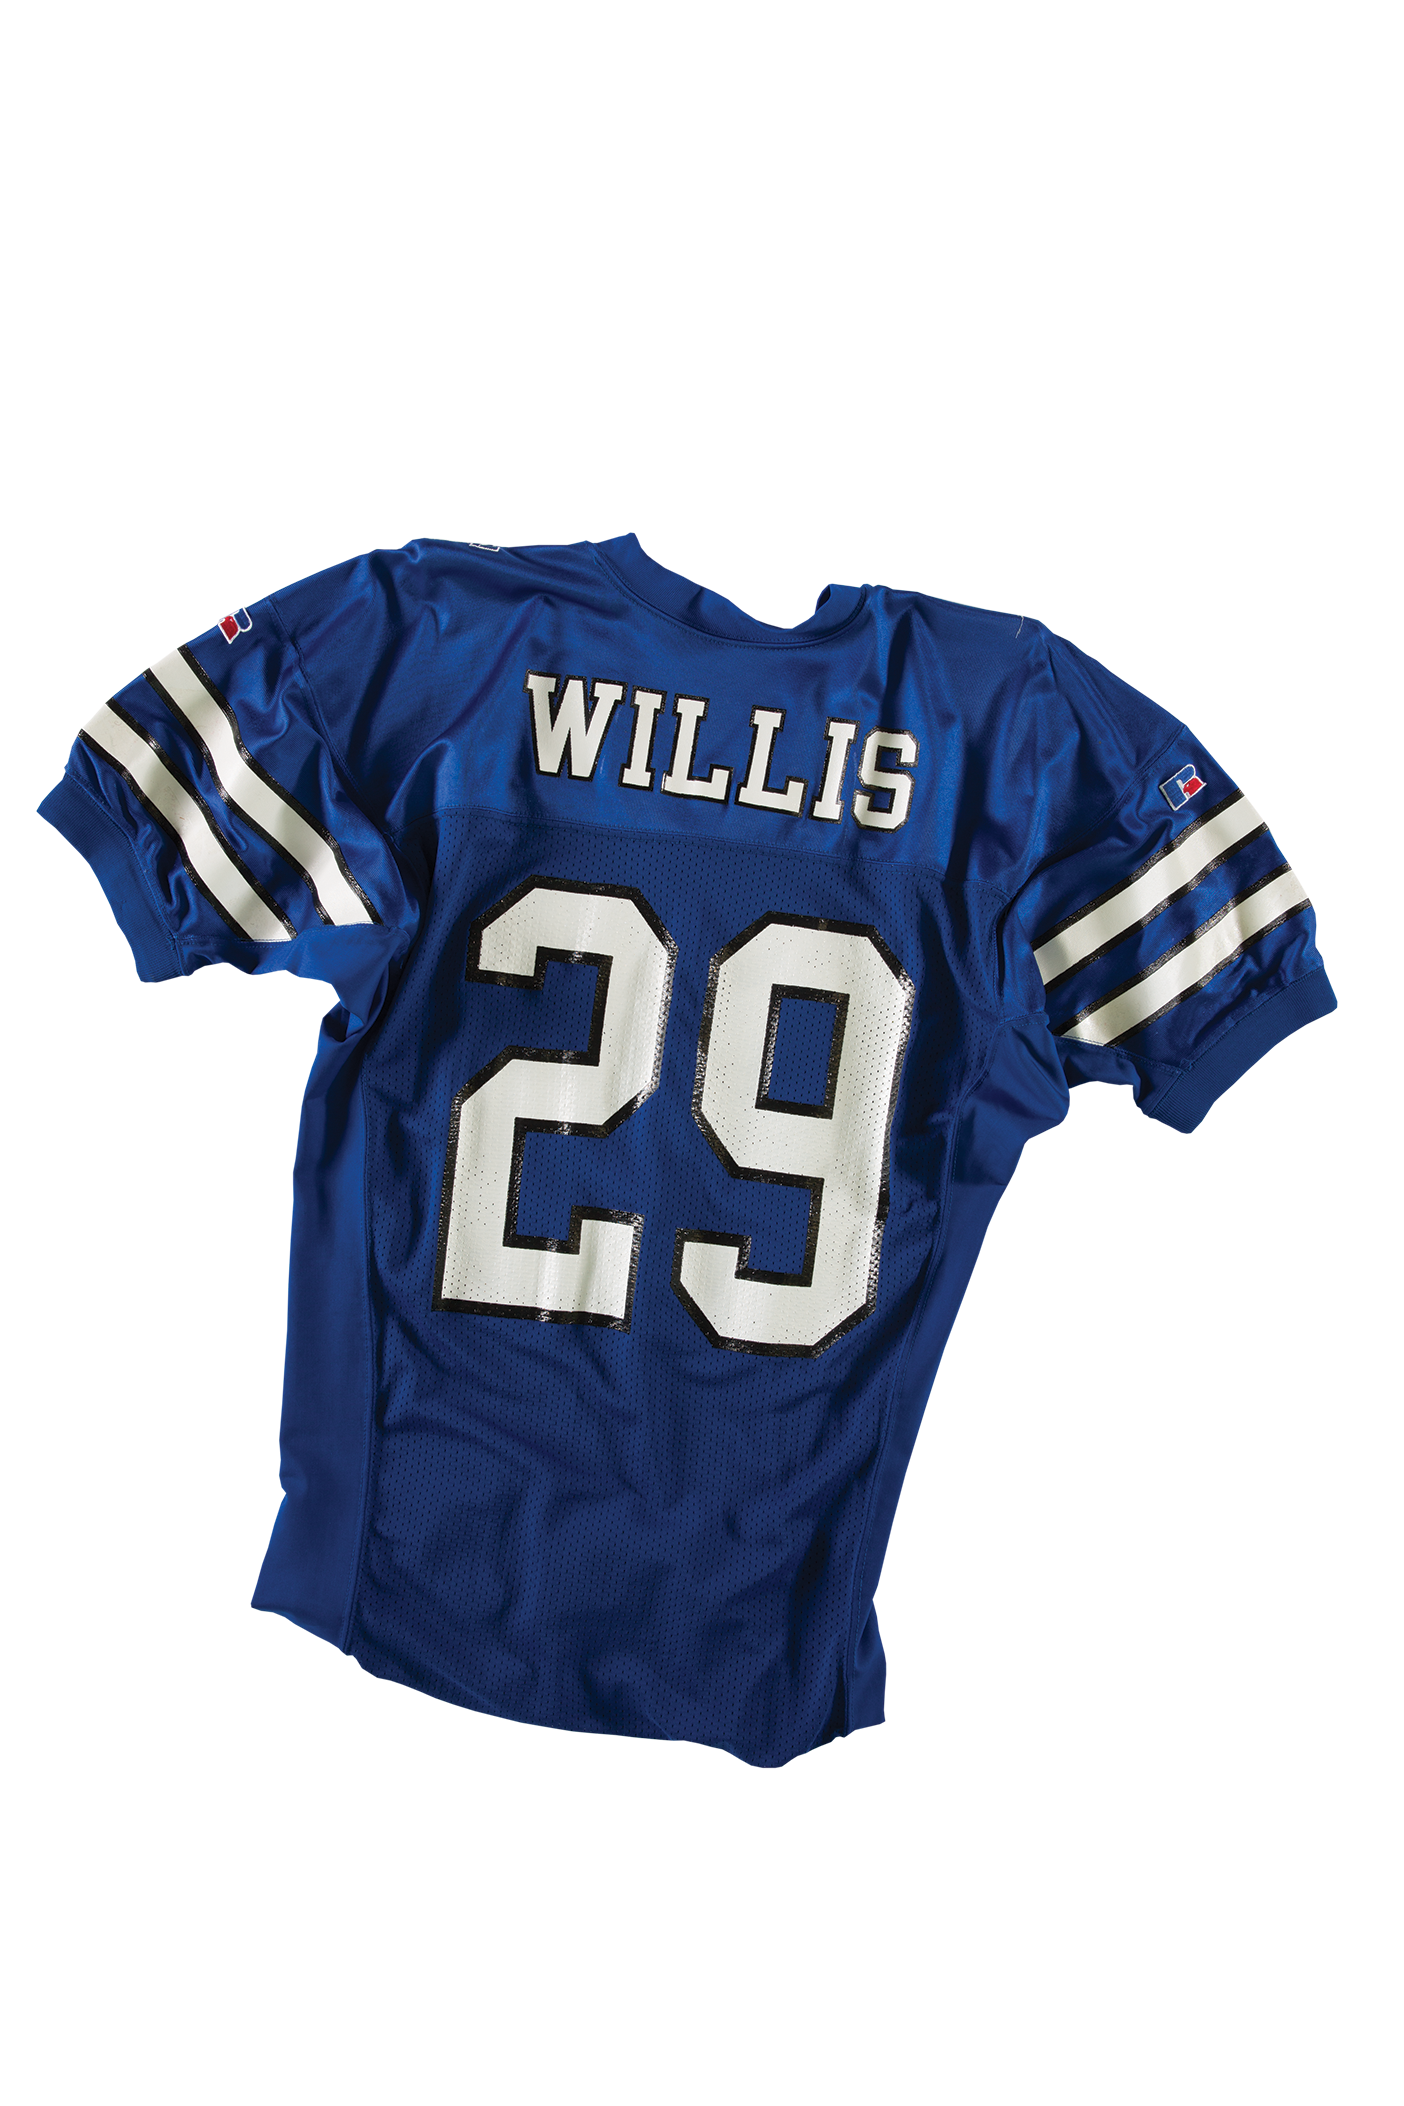 Jamal L. Willis jersey from 1993